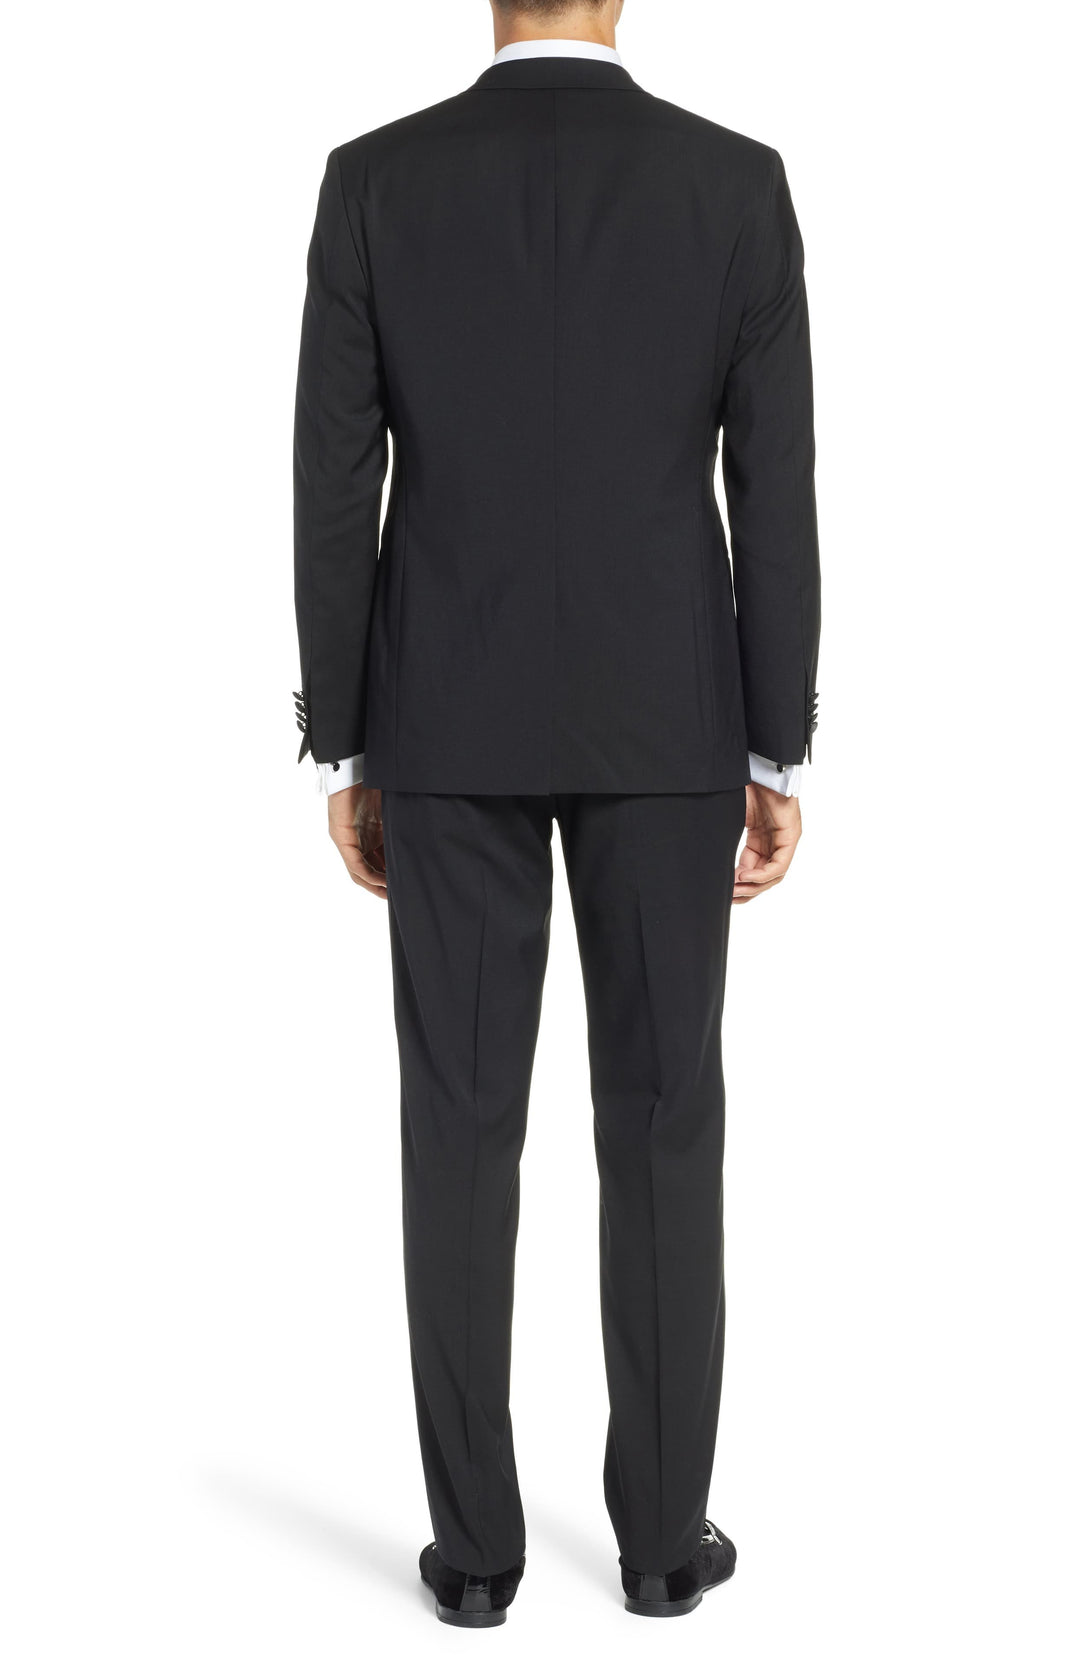 Adam Baker Men's Modern Fit Two-Piece Notch Lapel Tuxedo Suit